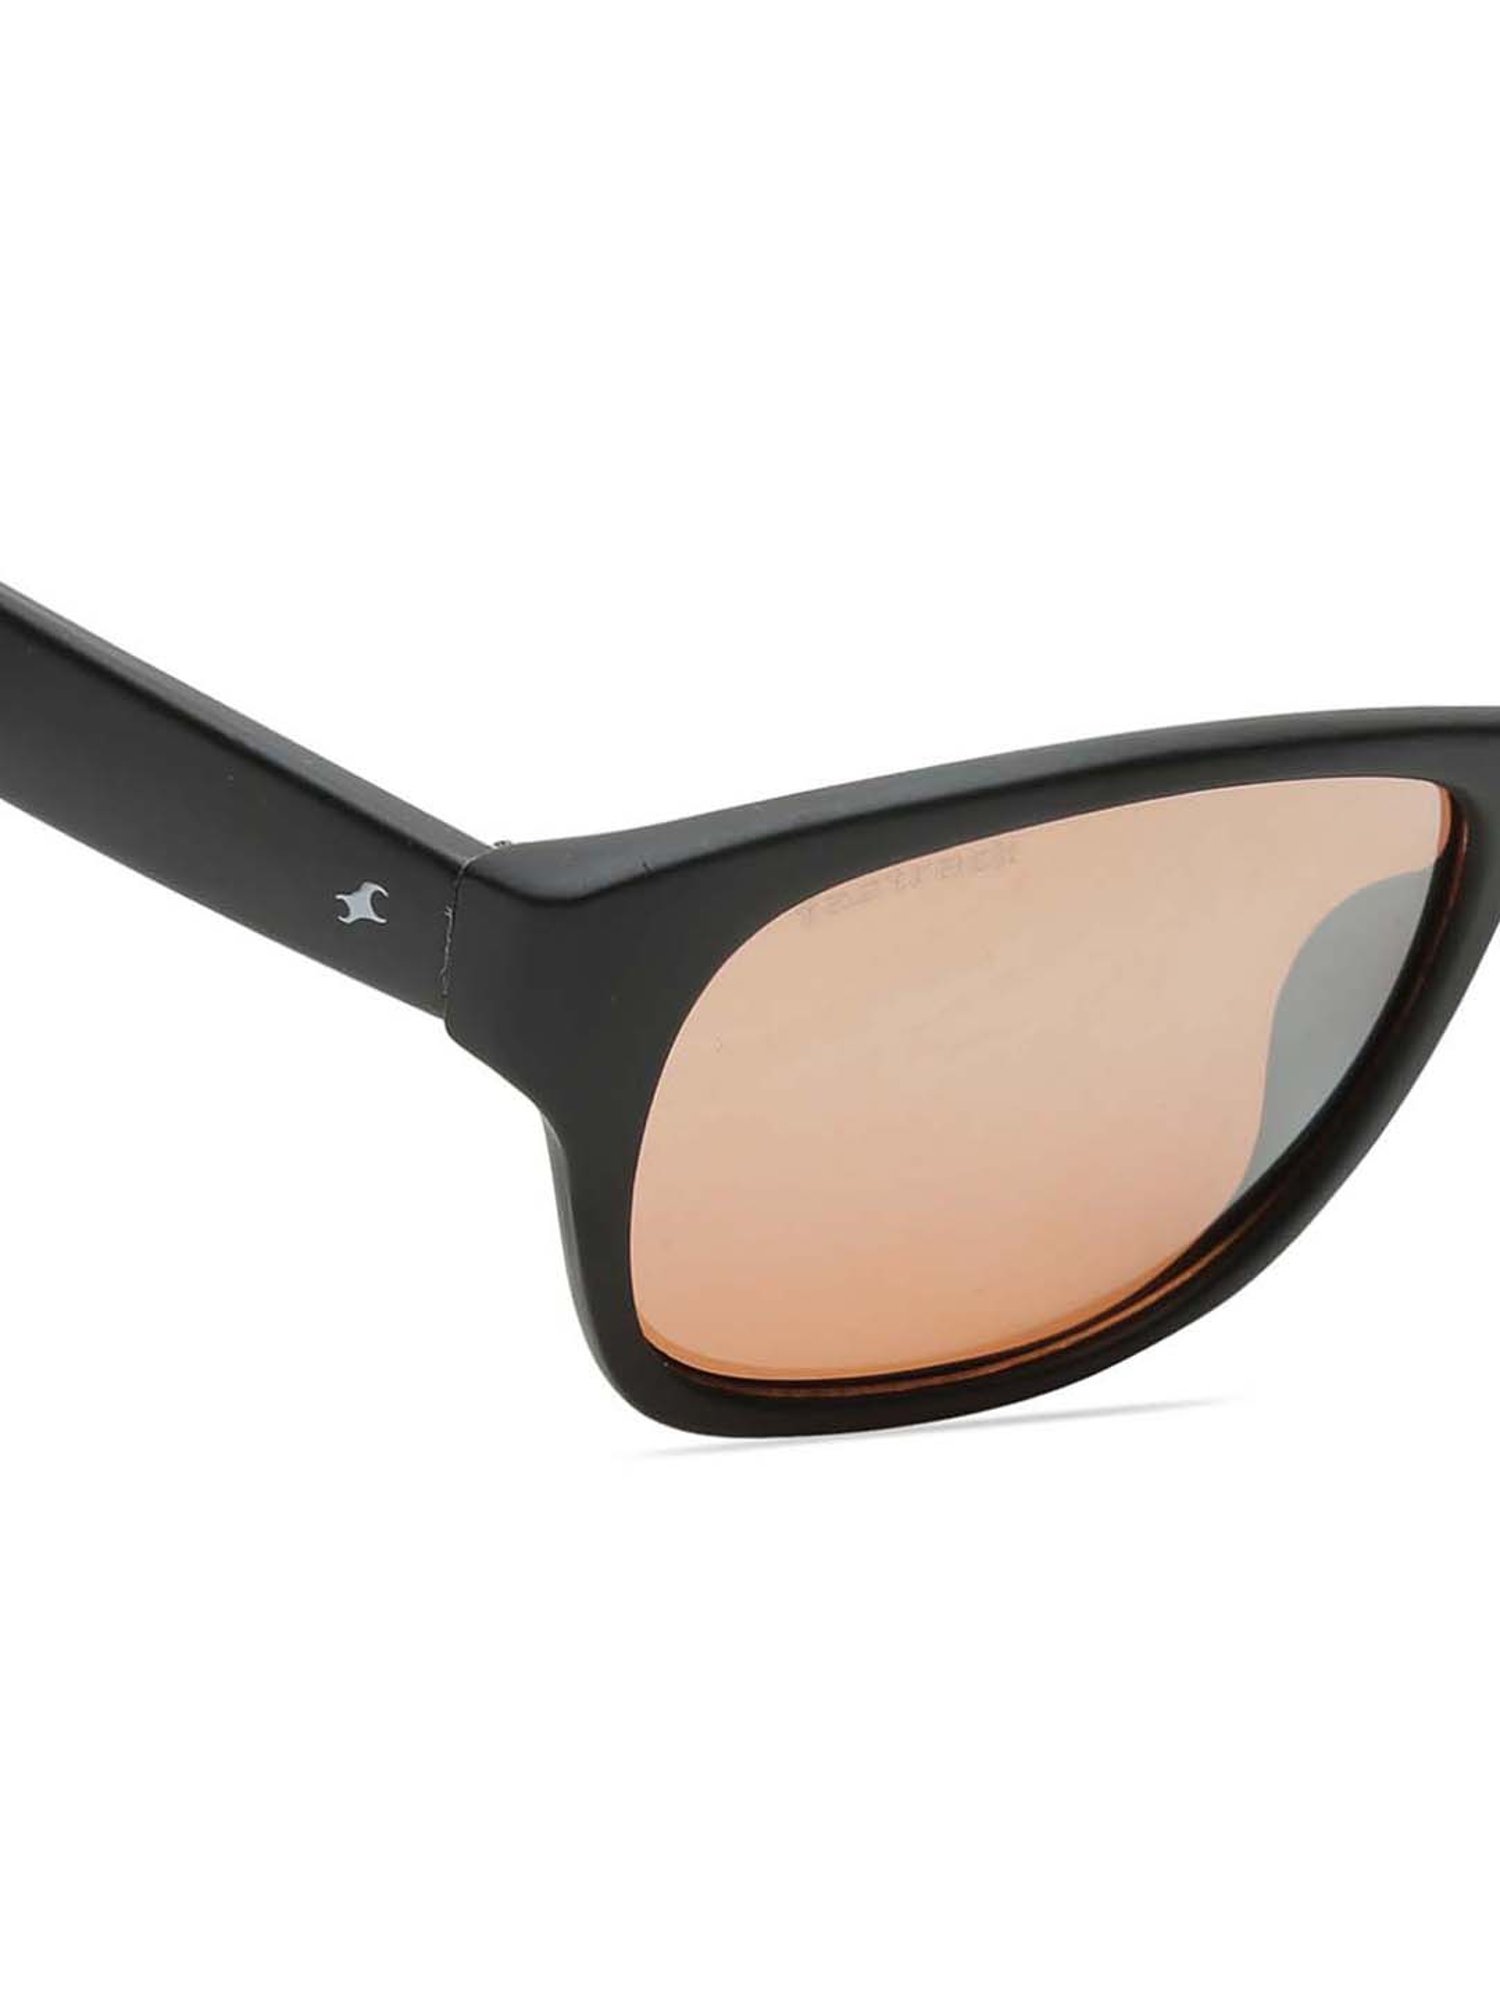 Fastrack Brown Tinted Wayfarer Sunglasses S15B3160 @ ₹1040